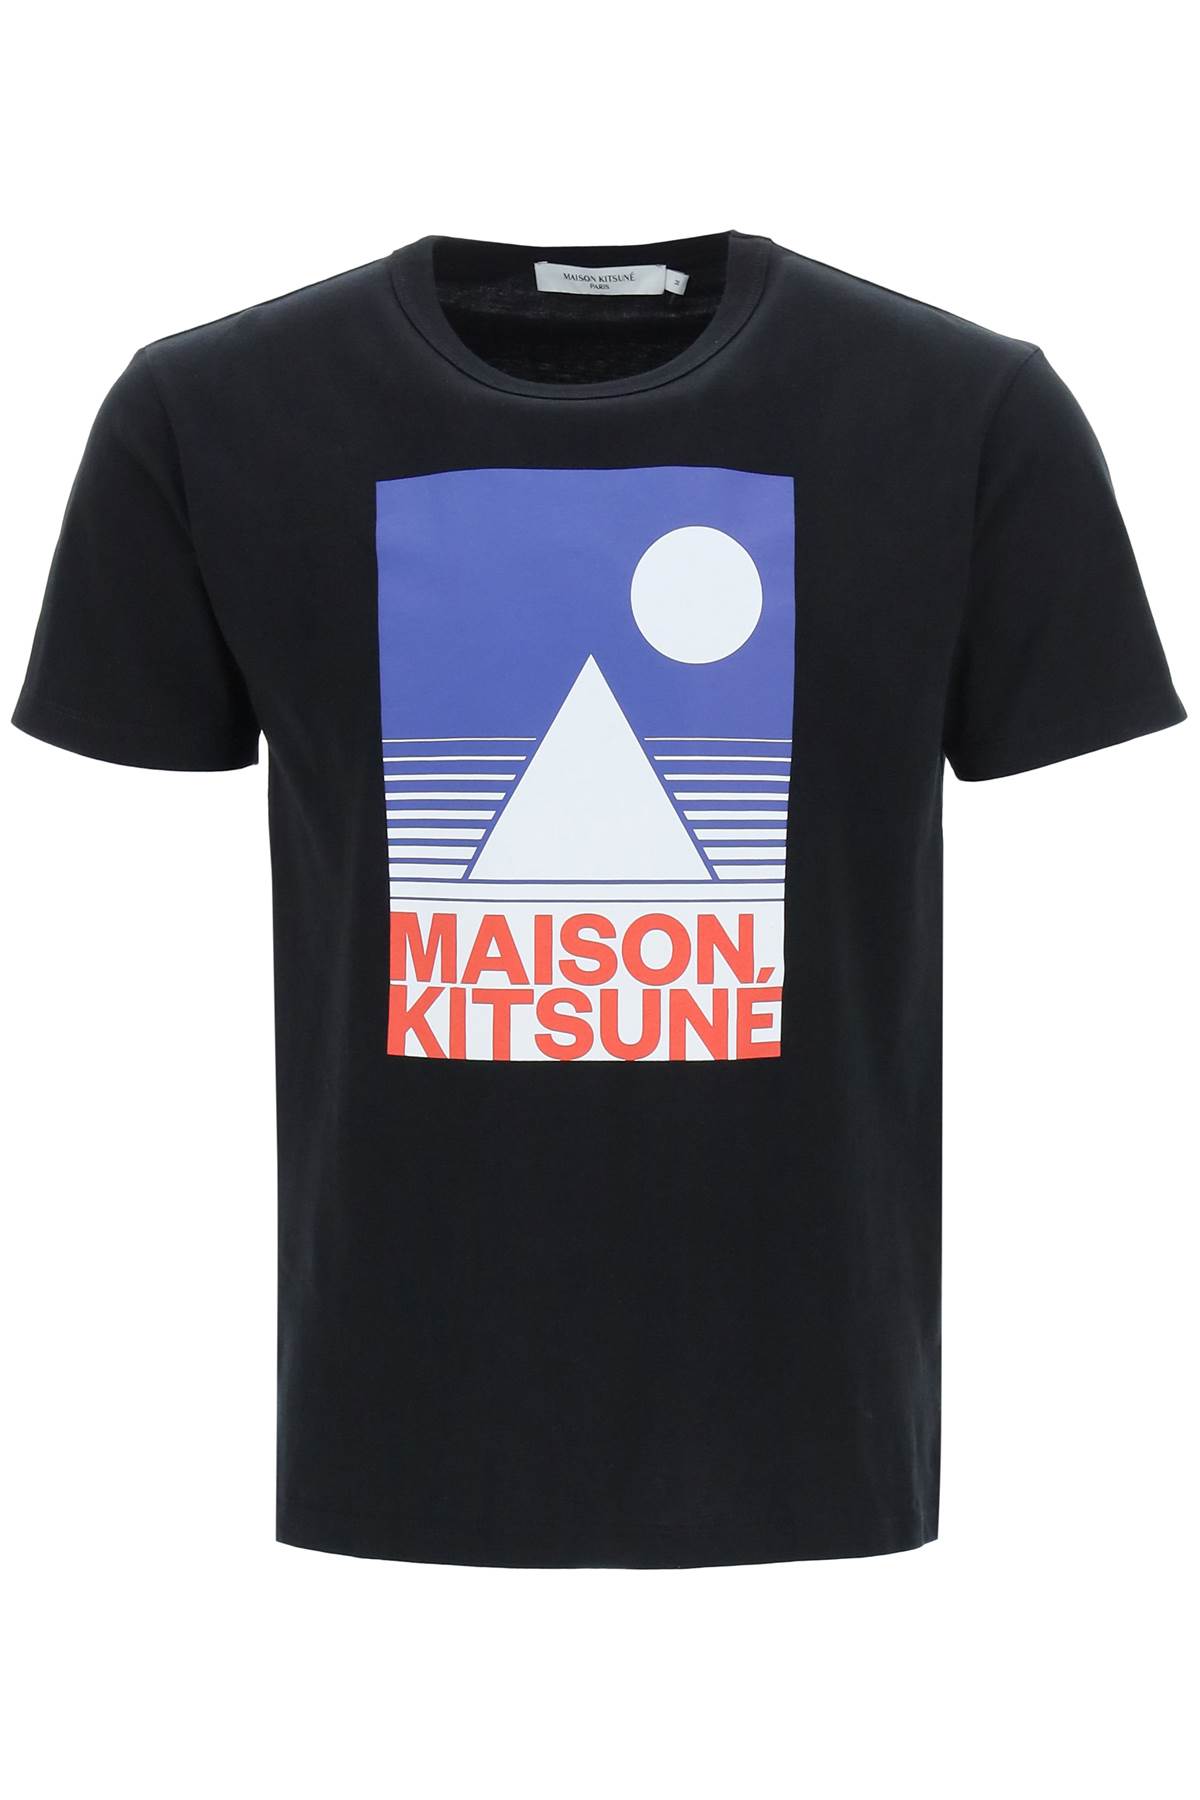 Maison Kitsuné Anthony Burrill Blue Edition T-shirt